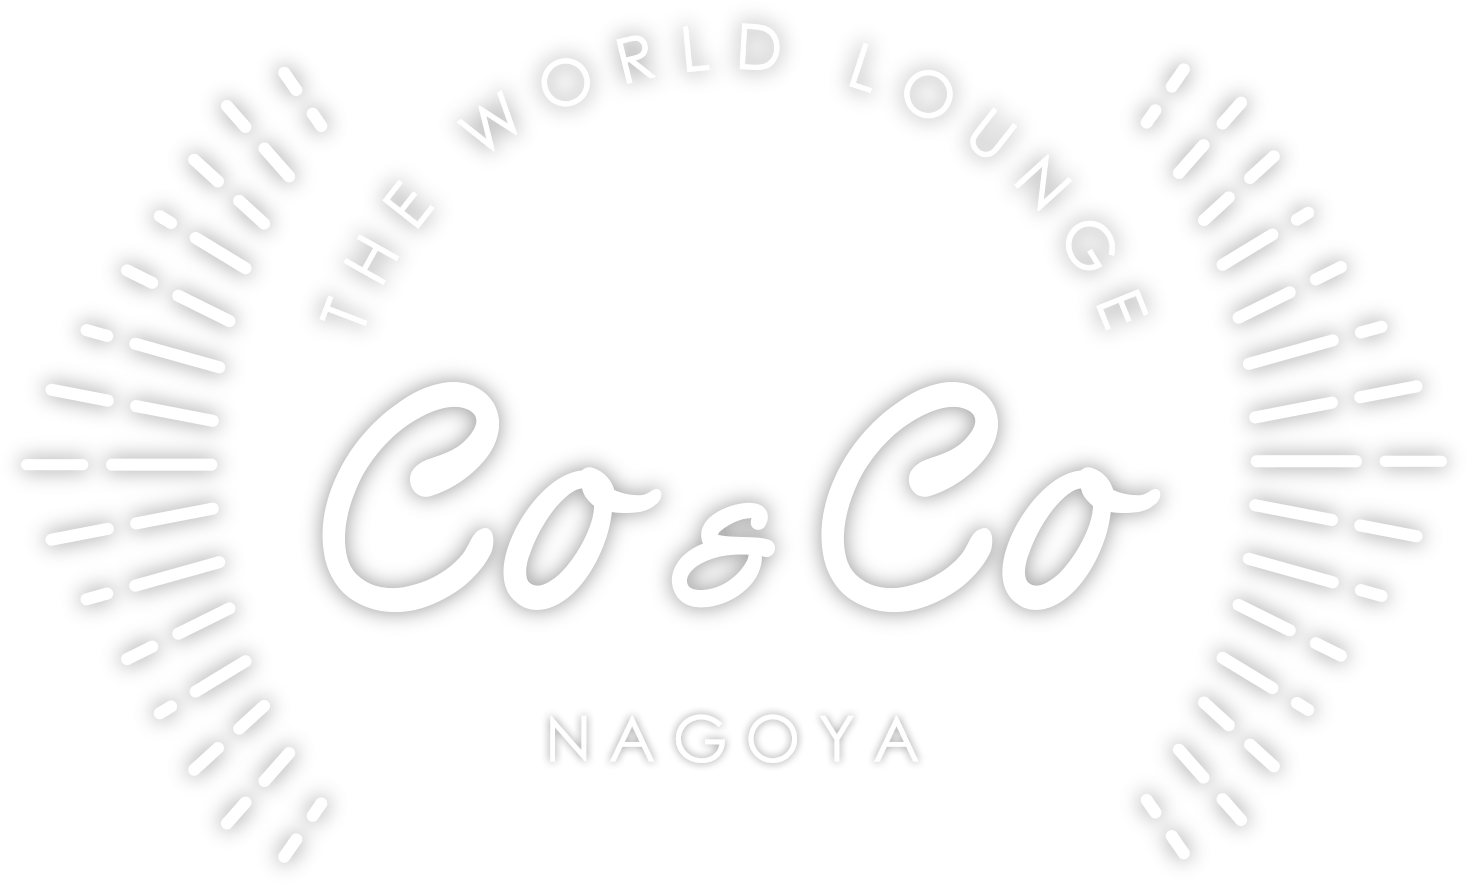 The World Lounge Co&Co Nagoya | ザ・ワールドラウンジ Co&Co 名古屋